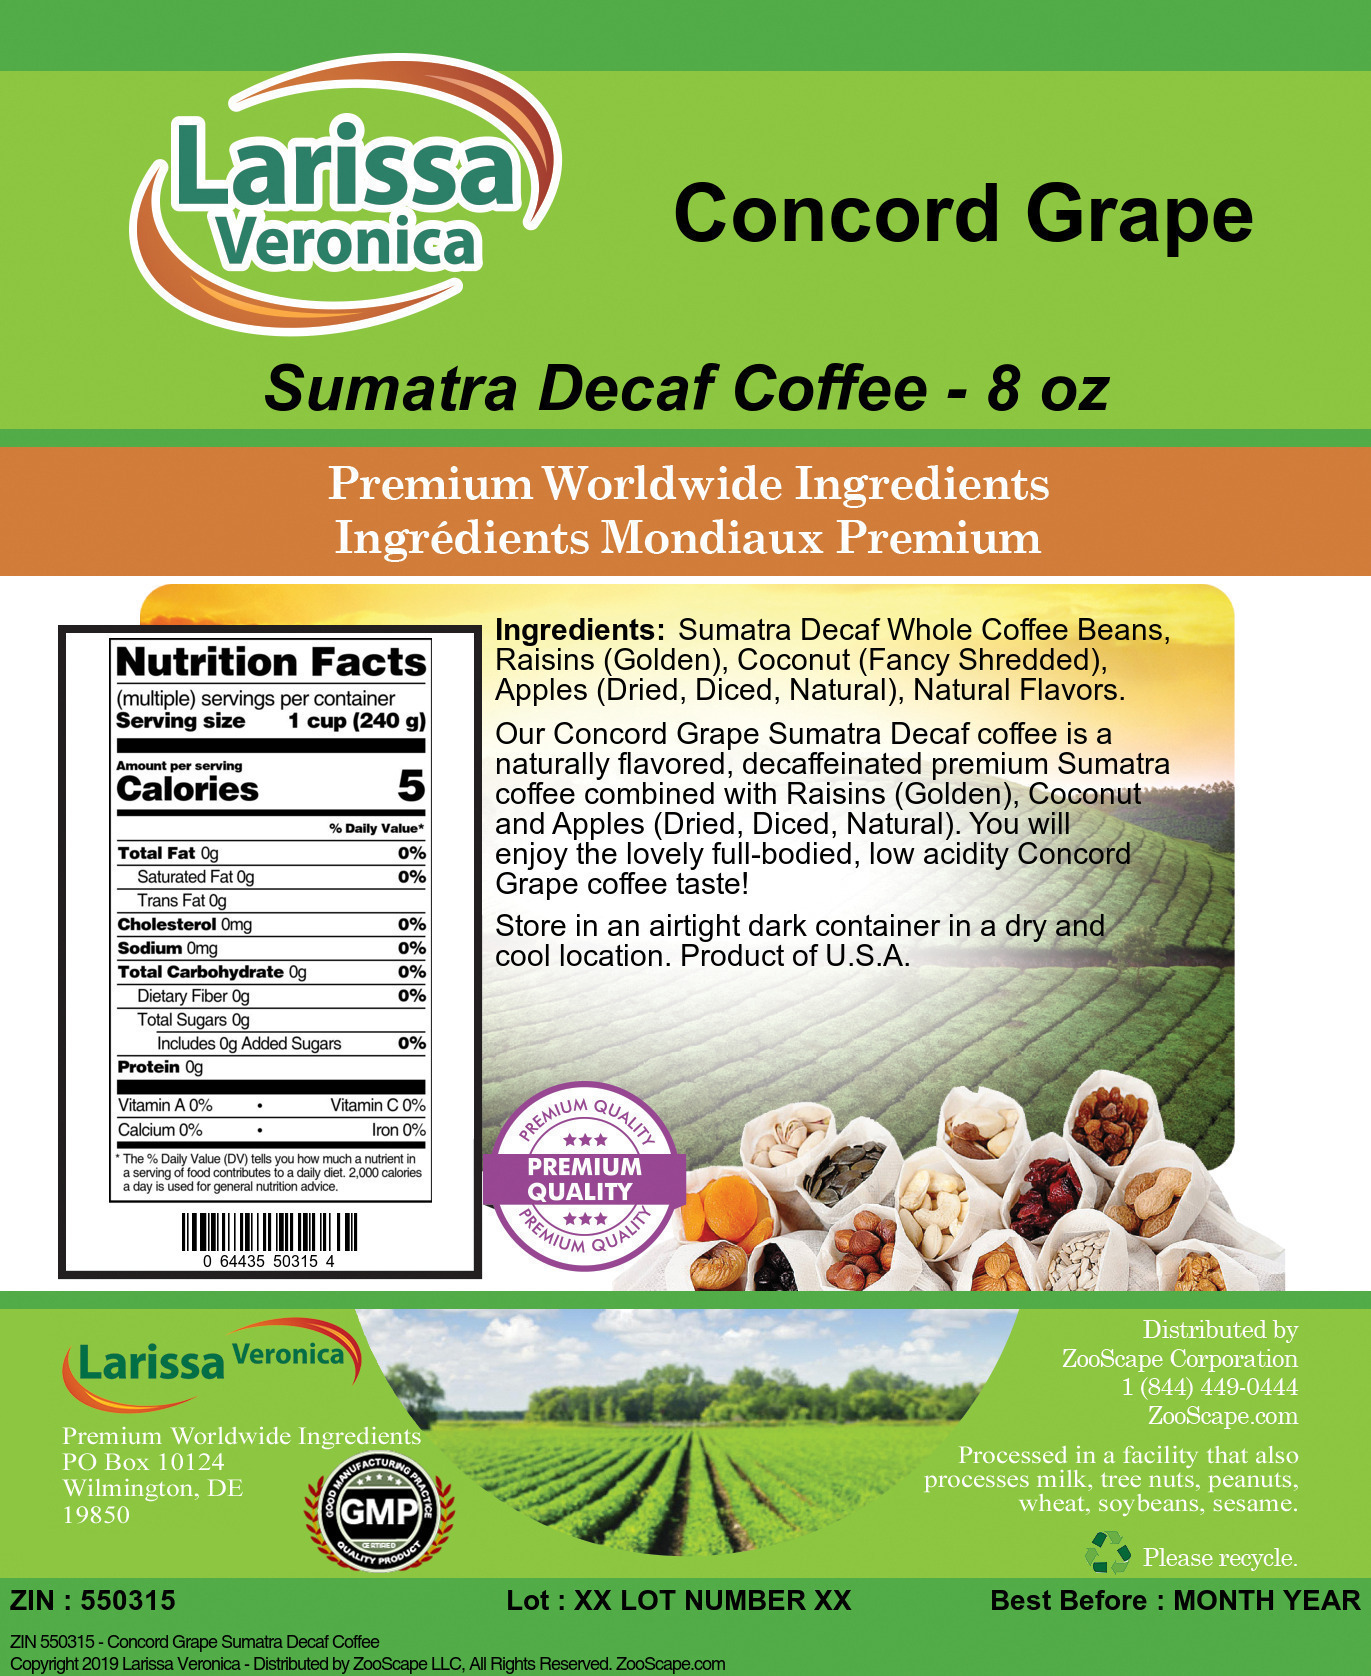 Concord Grape Sumatra Decaf Coffee - Label